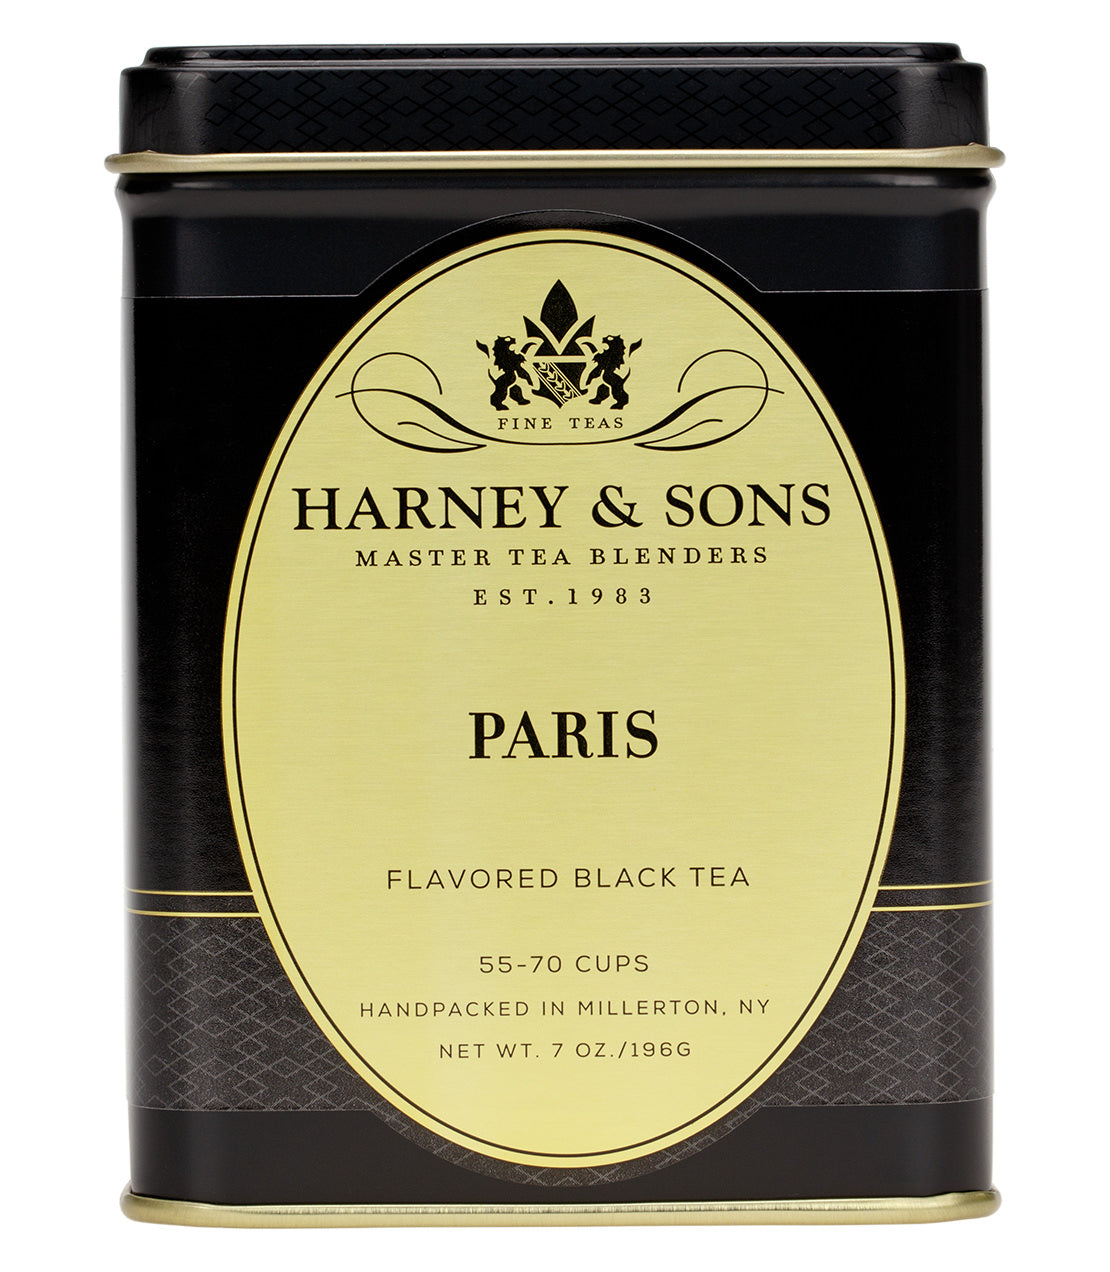 Paris - Loose 7 oz. Tin - Harney & Sons Fine Teas